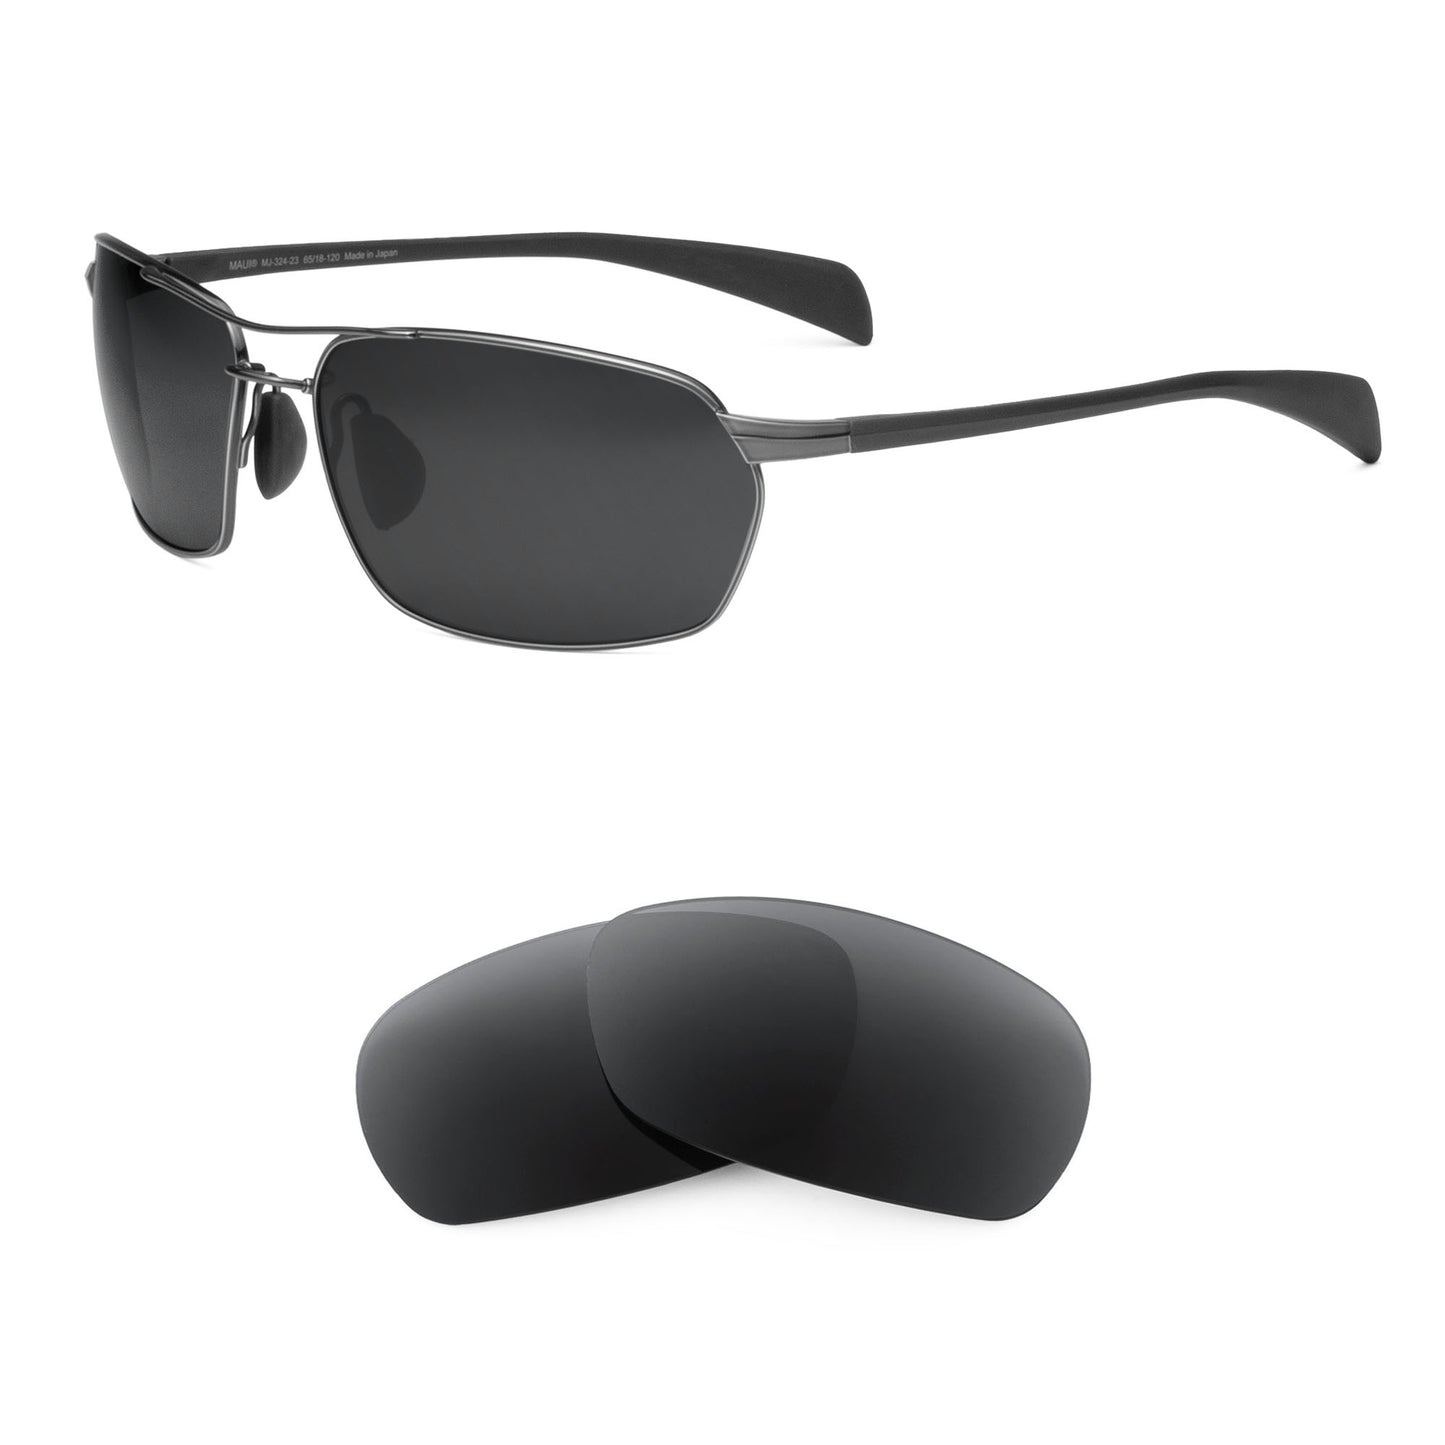 Maui Jim Maliko Gulch MJ324 sunglasses with replacement lenses